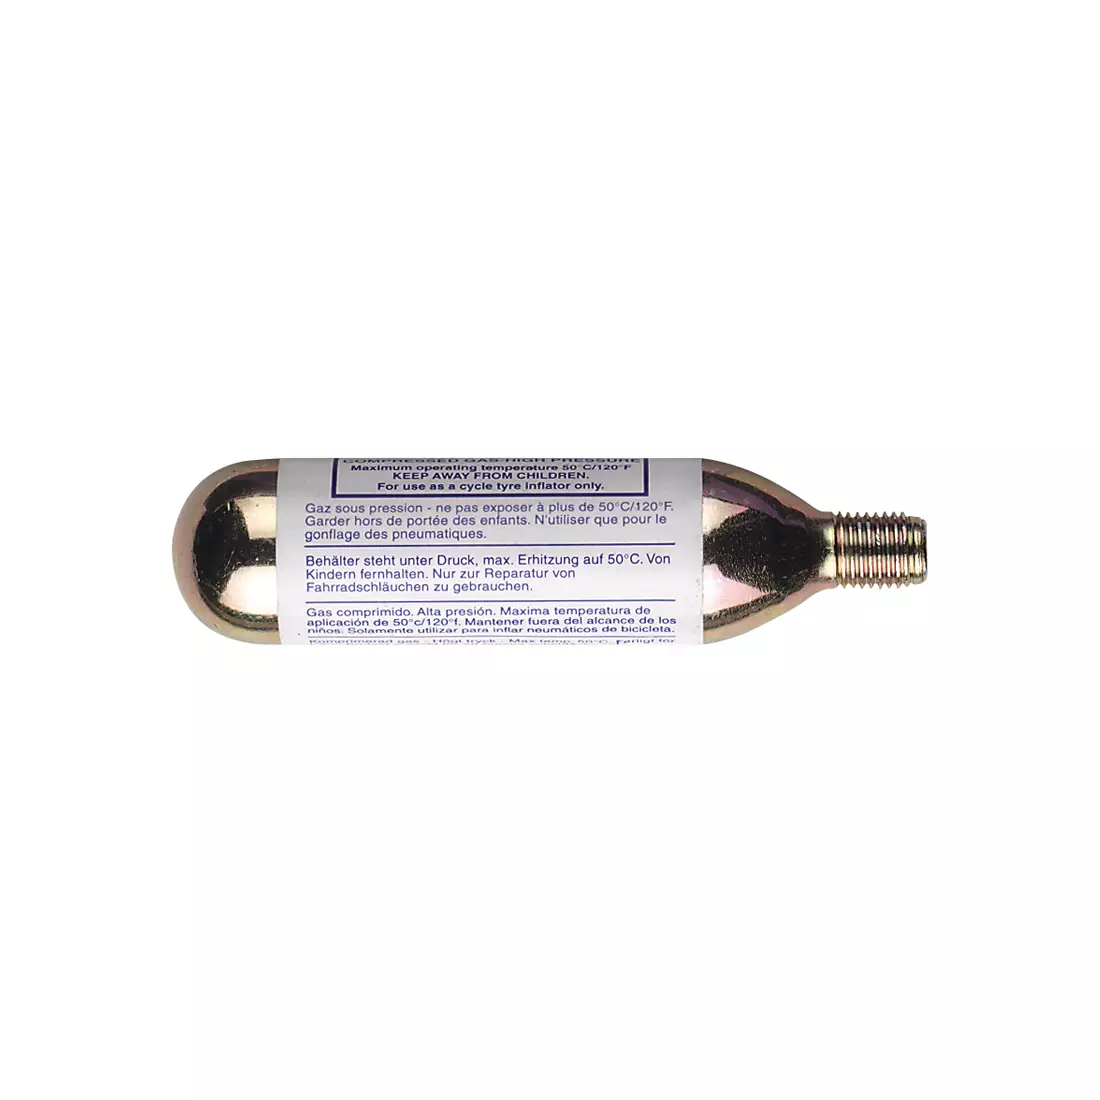 WELDTITE gas cartridge for pump, jetvalve co2 16g 5pcs. WLD-07009